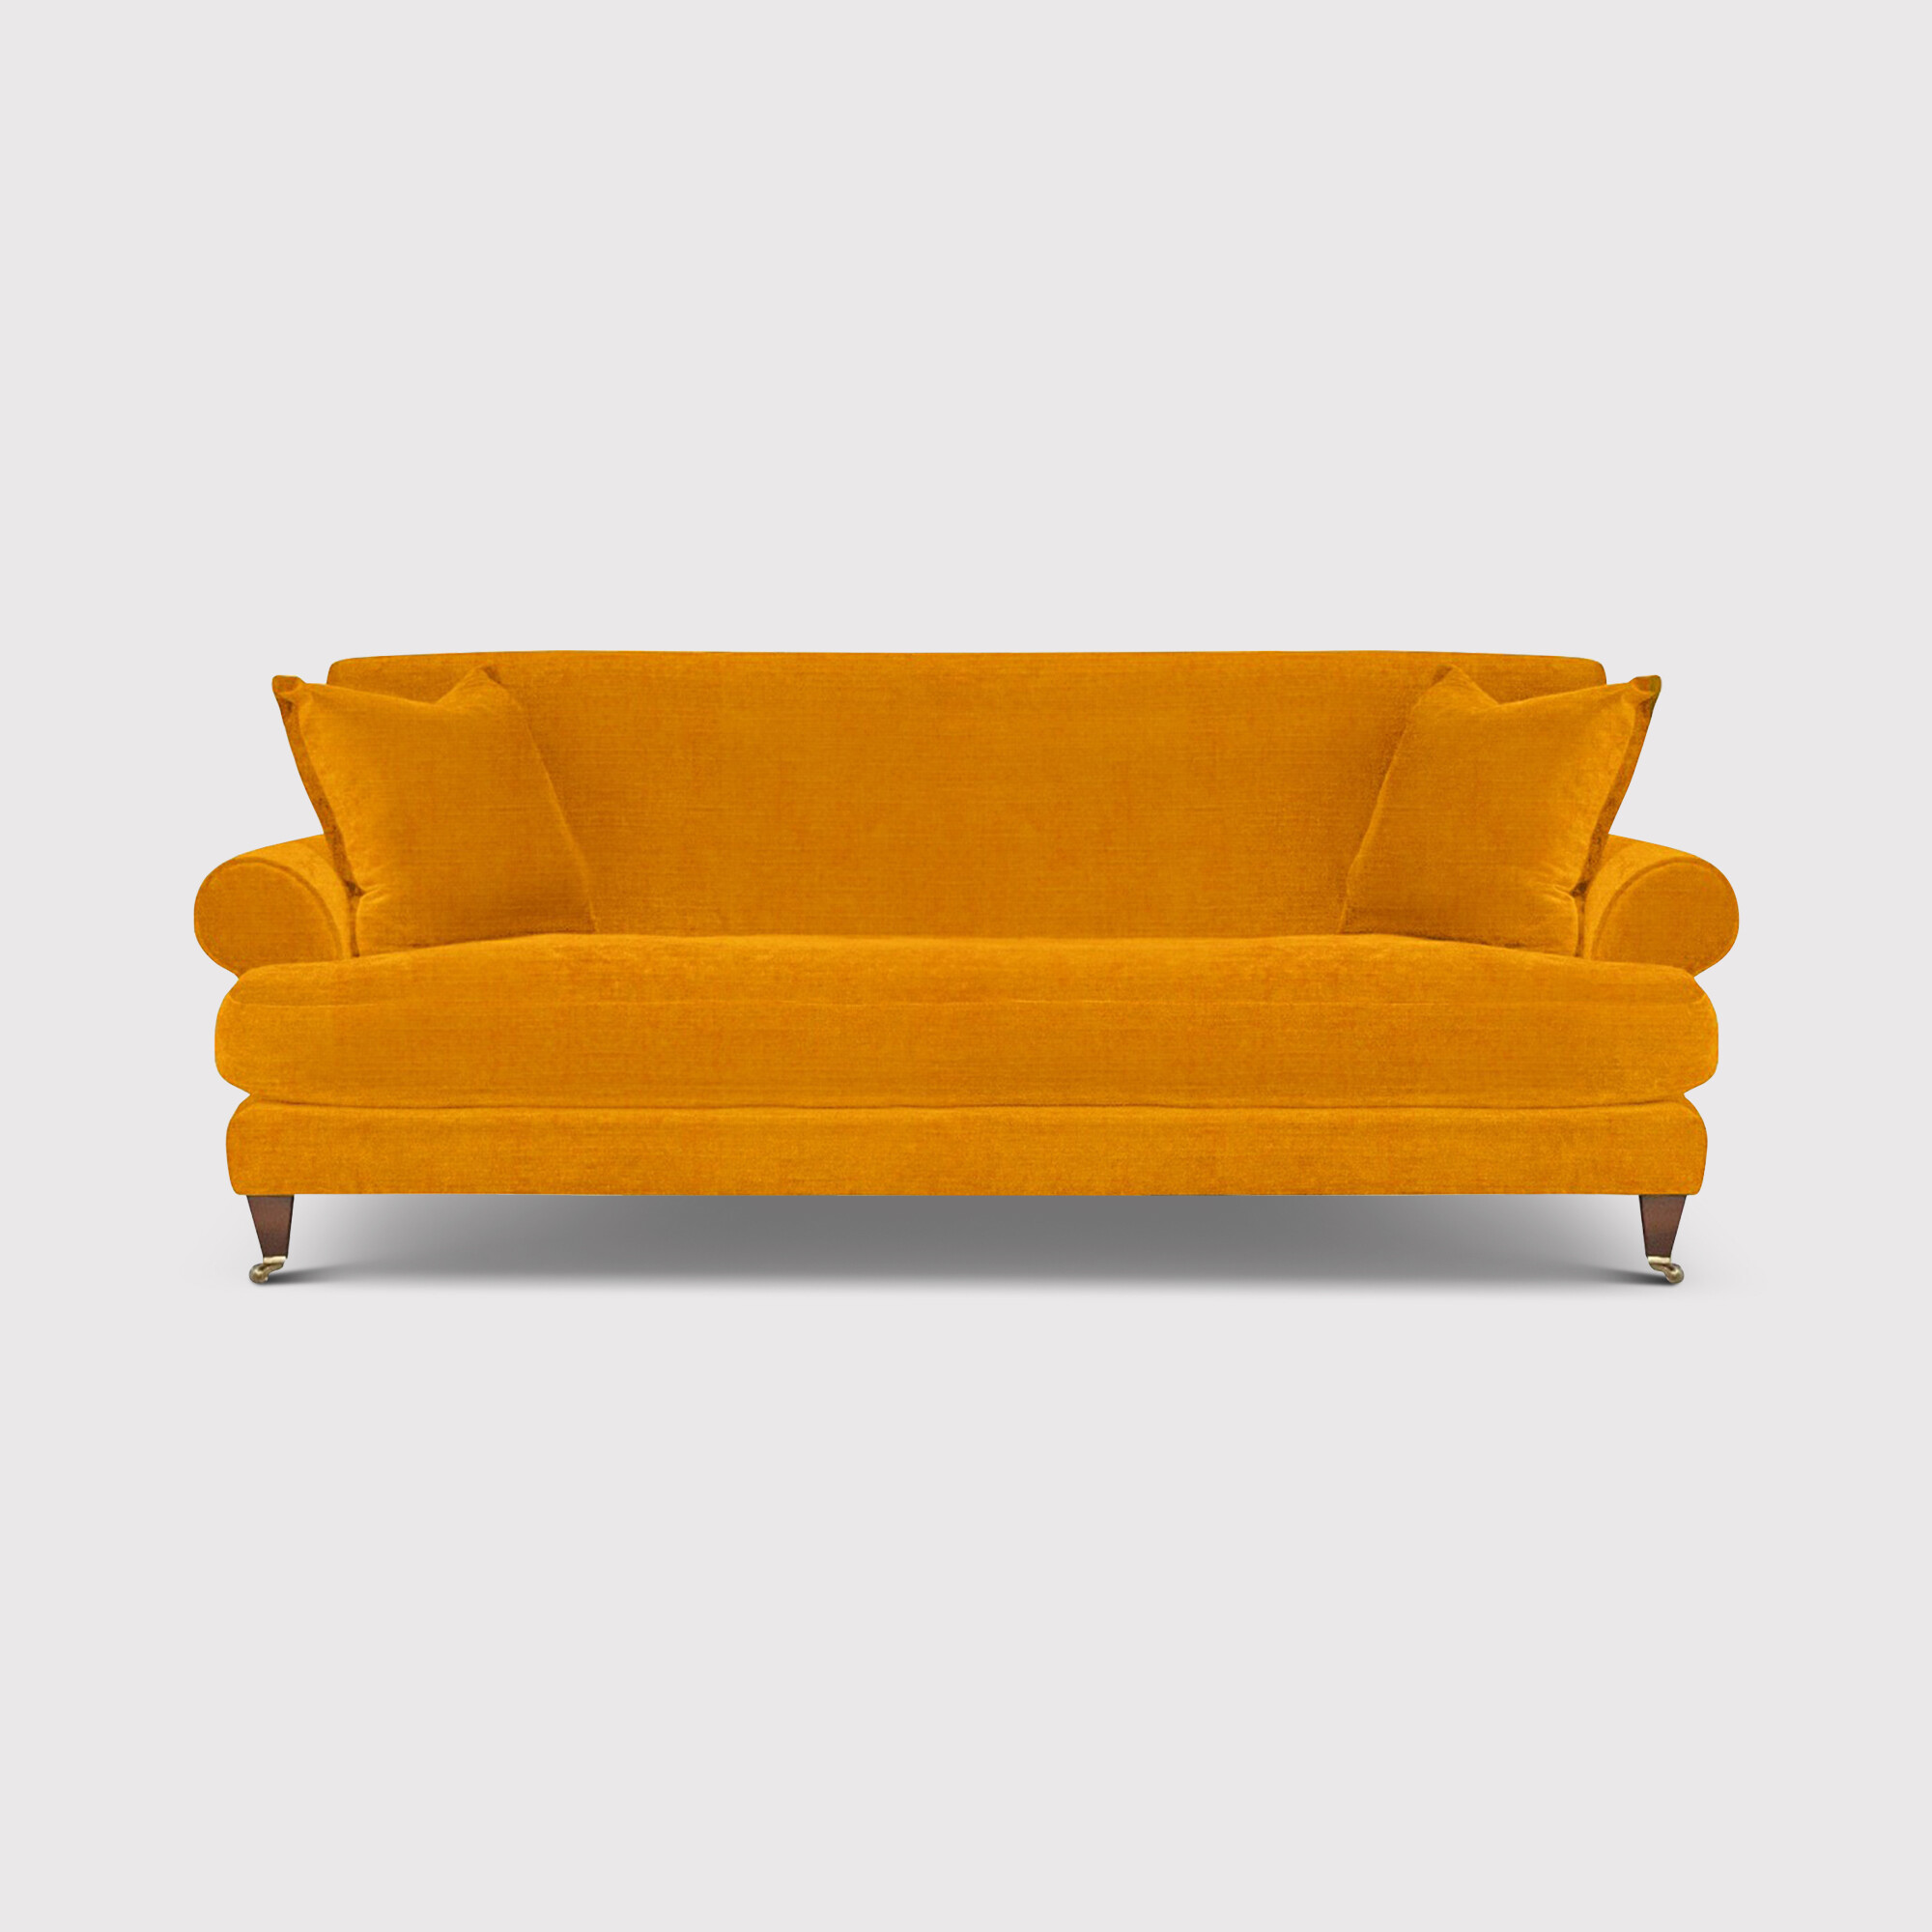 Fairlawn 3 Seater Sofa, Yellow Fabric | Barker & Stonehouse